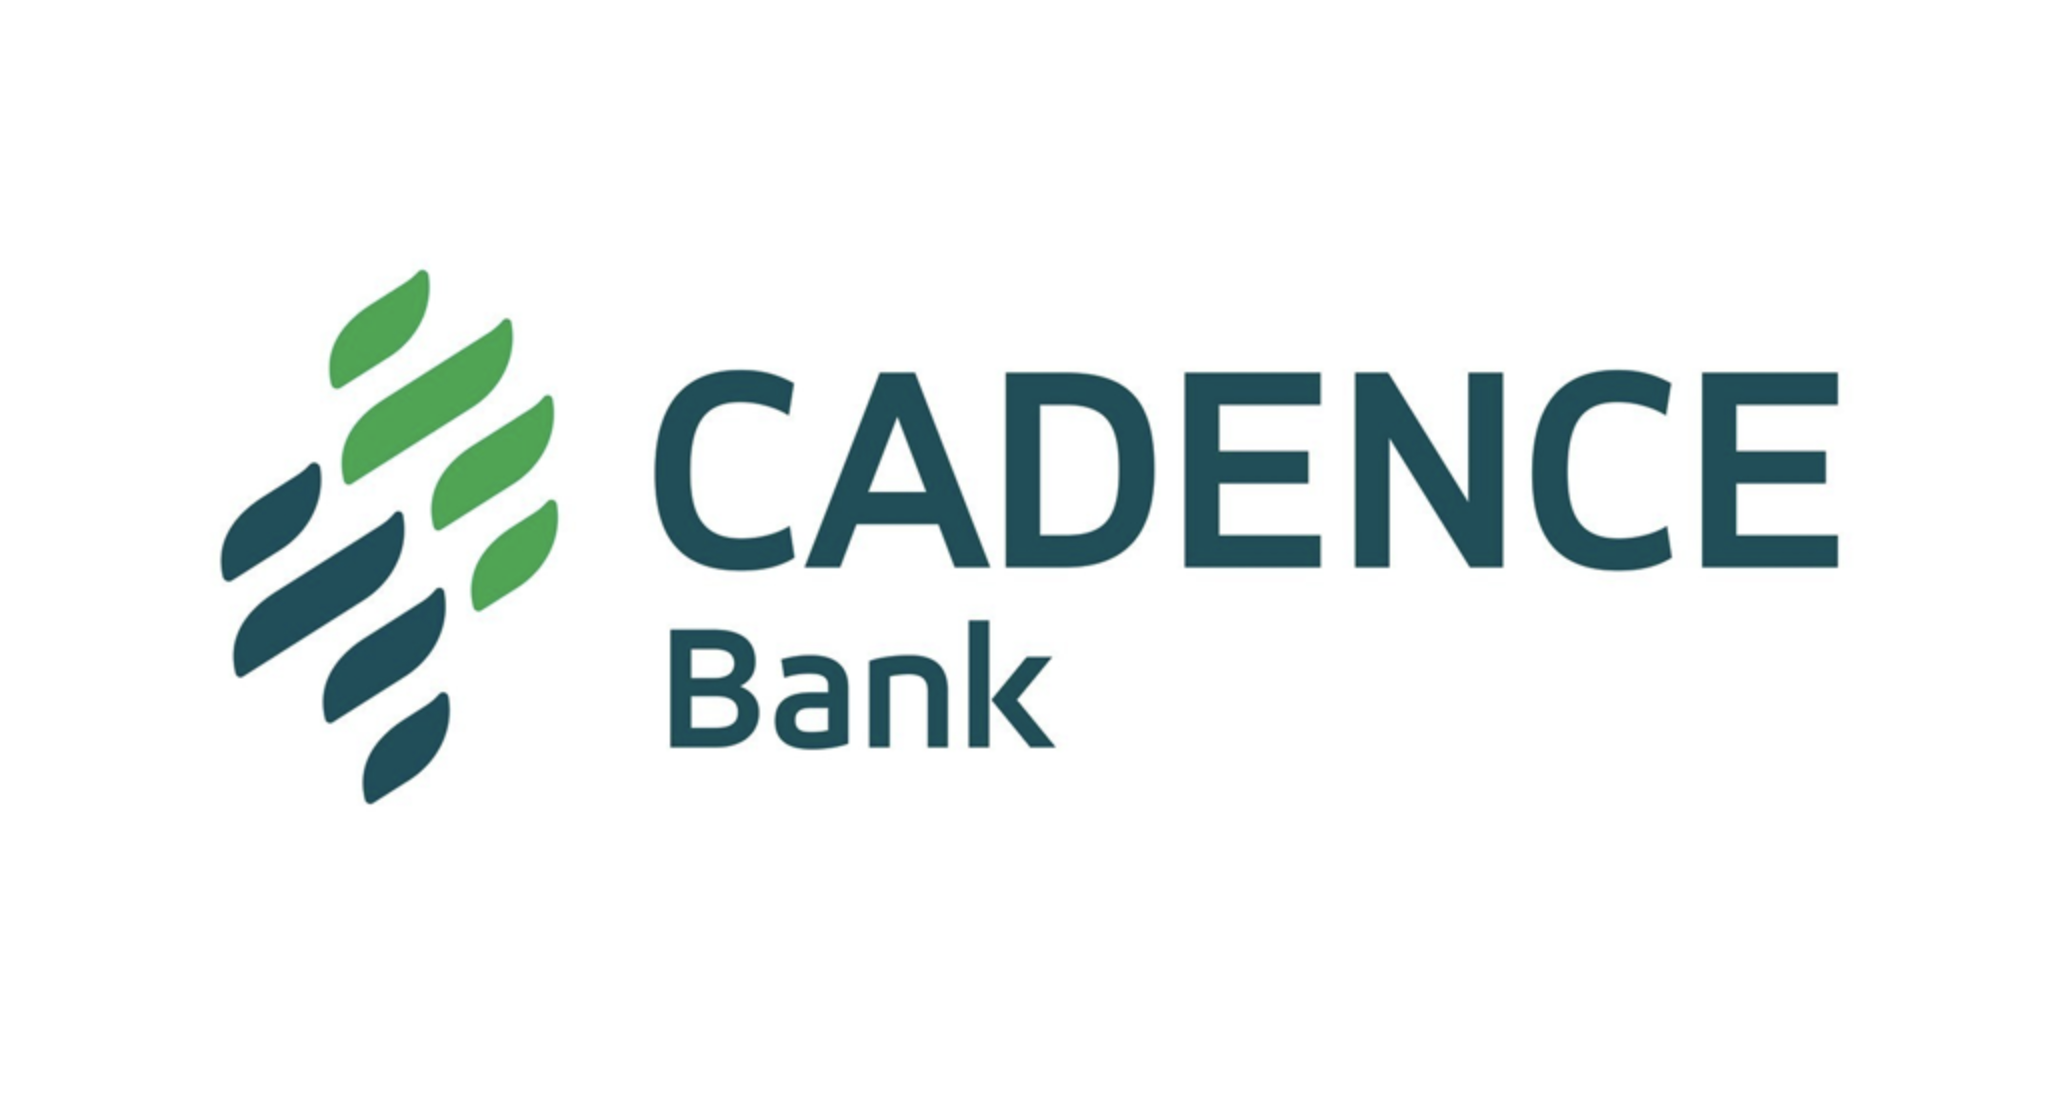 Cadence银行公布了品牌形象新的logo设计和VI设计